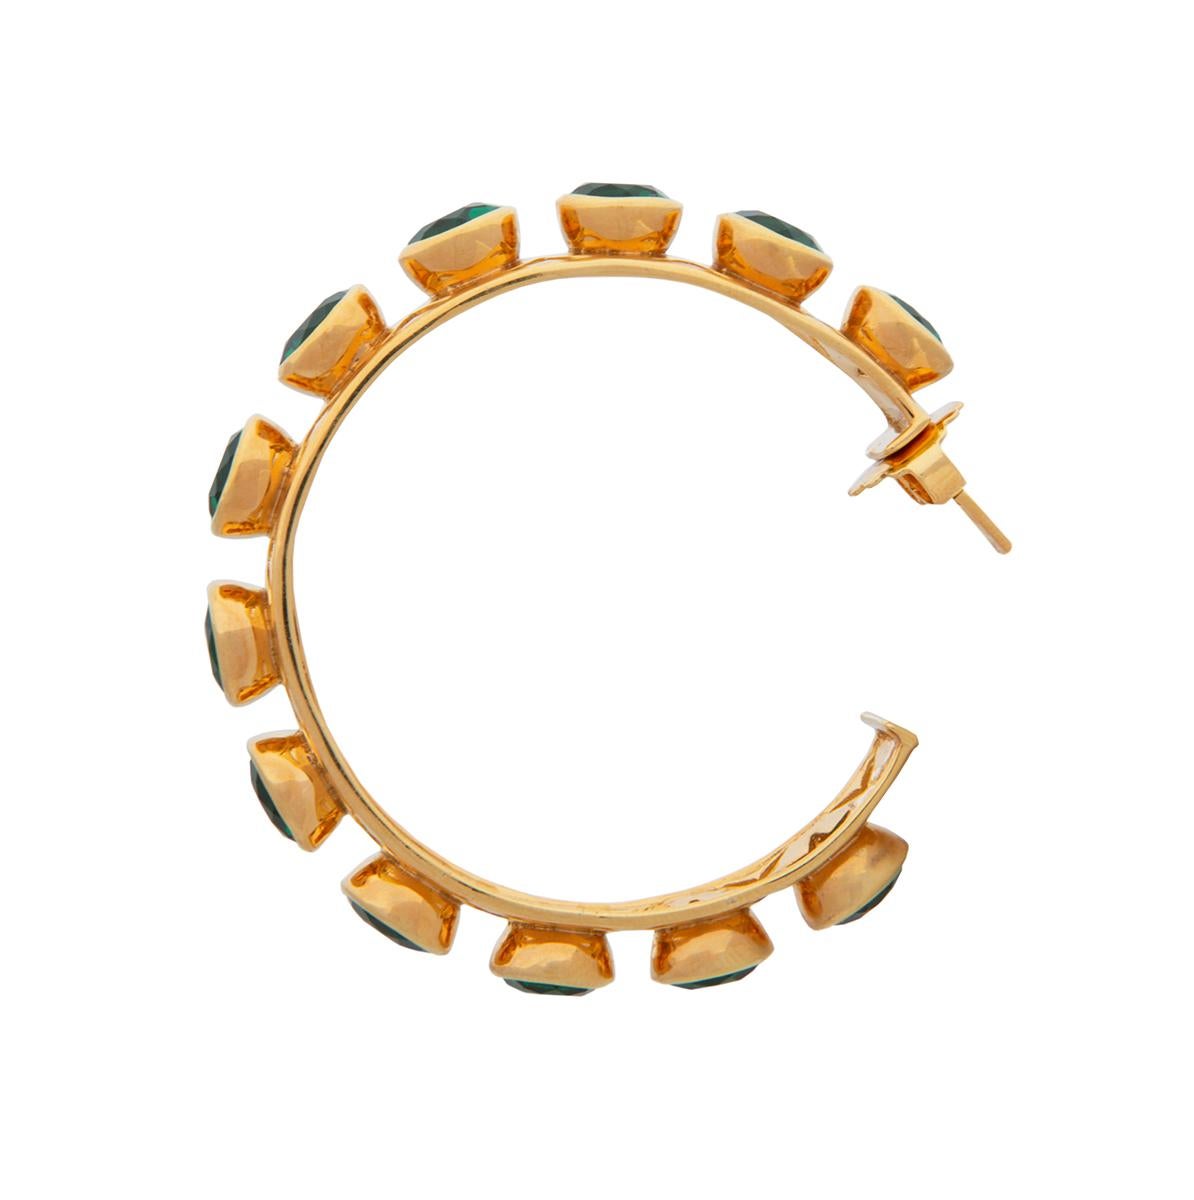 Shari Hoop Earrings in 18K Gold with Multicolored Gemstones In New Condition For Sale In Atlanta, GA